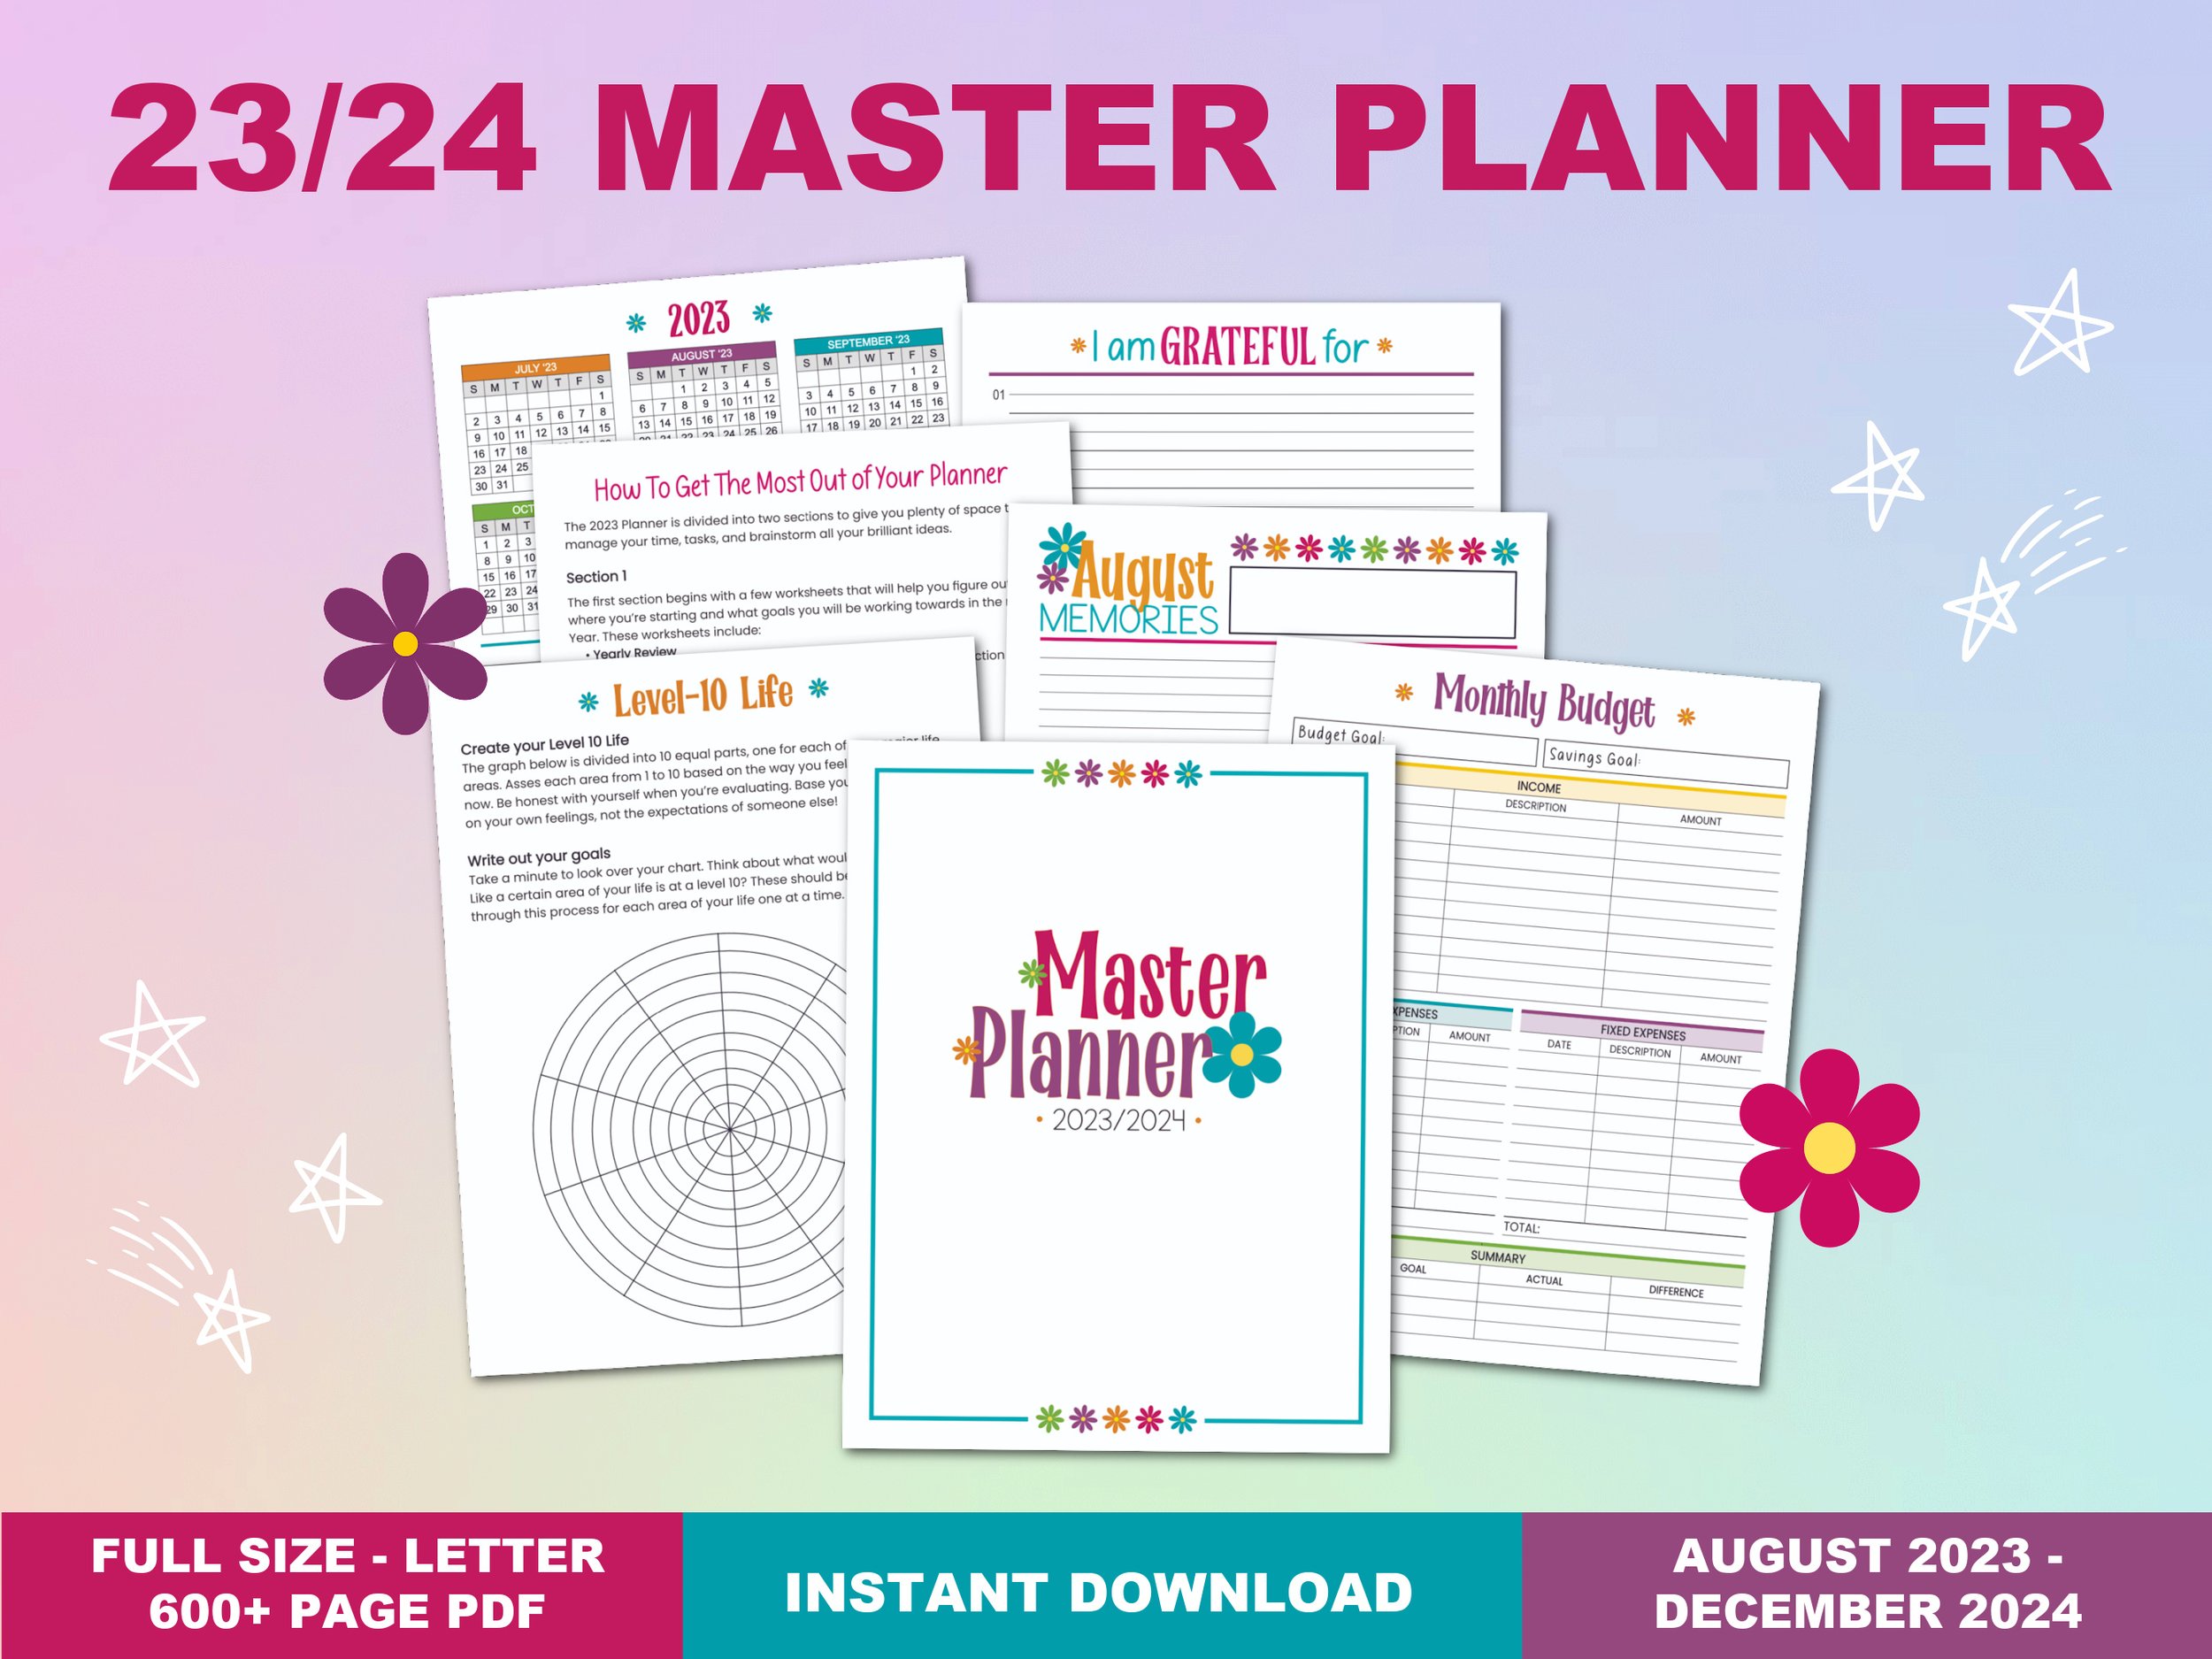 2023_2024 Master Planner Retro Flowers